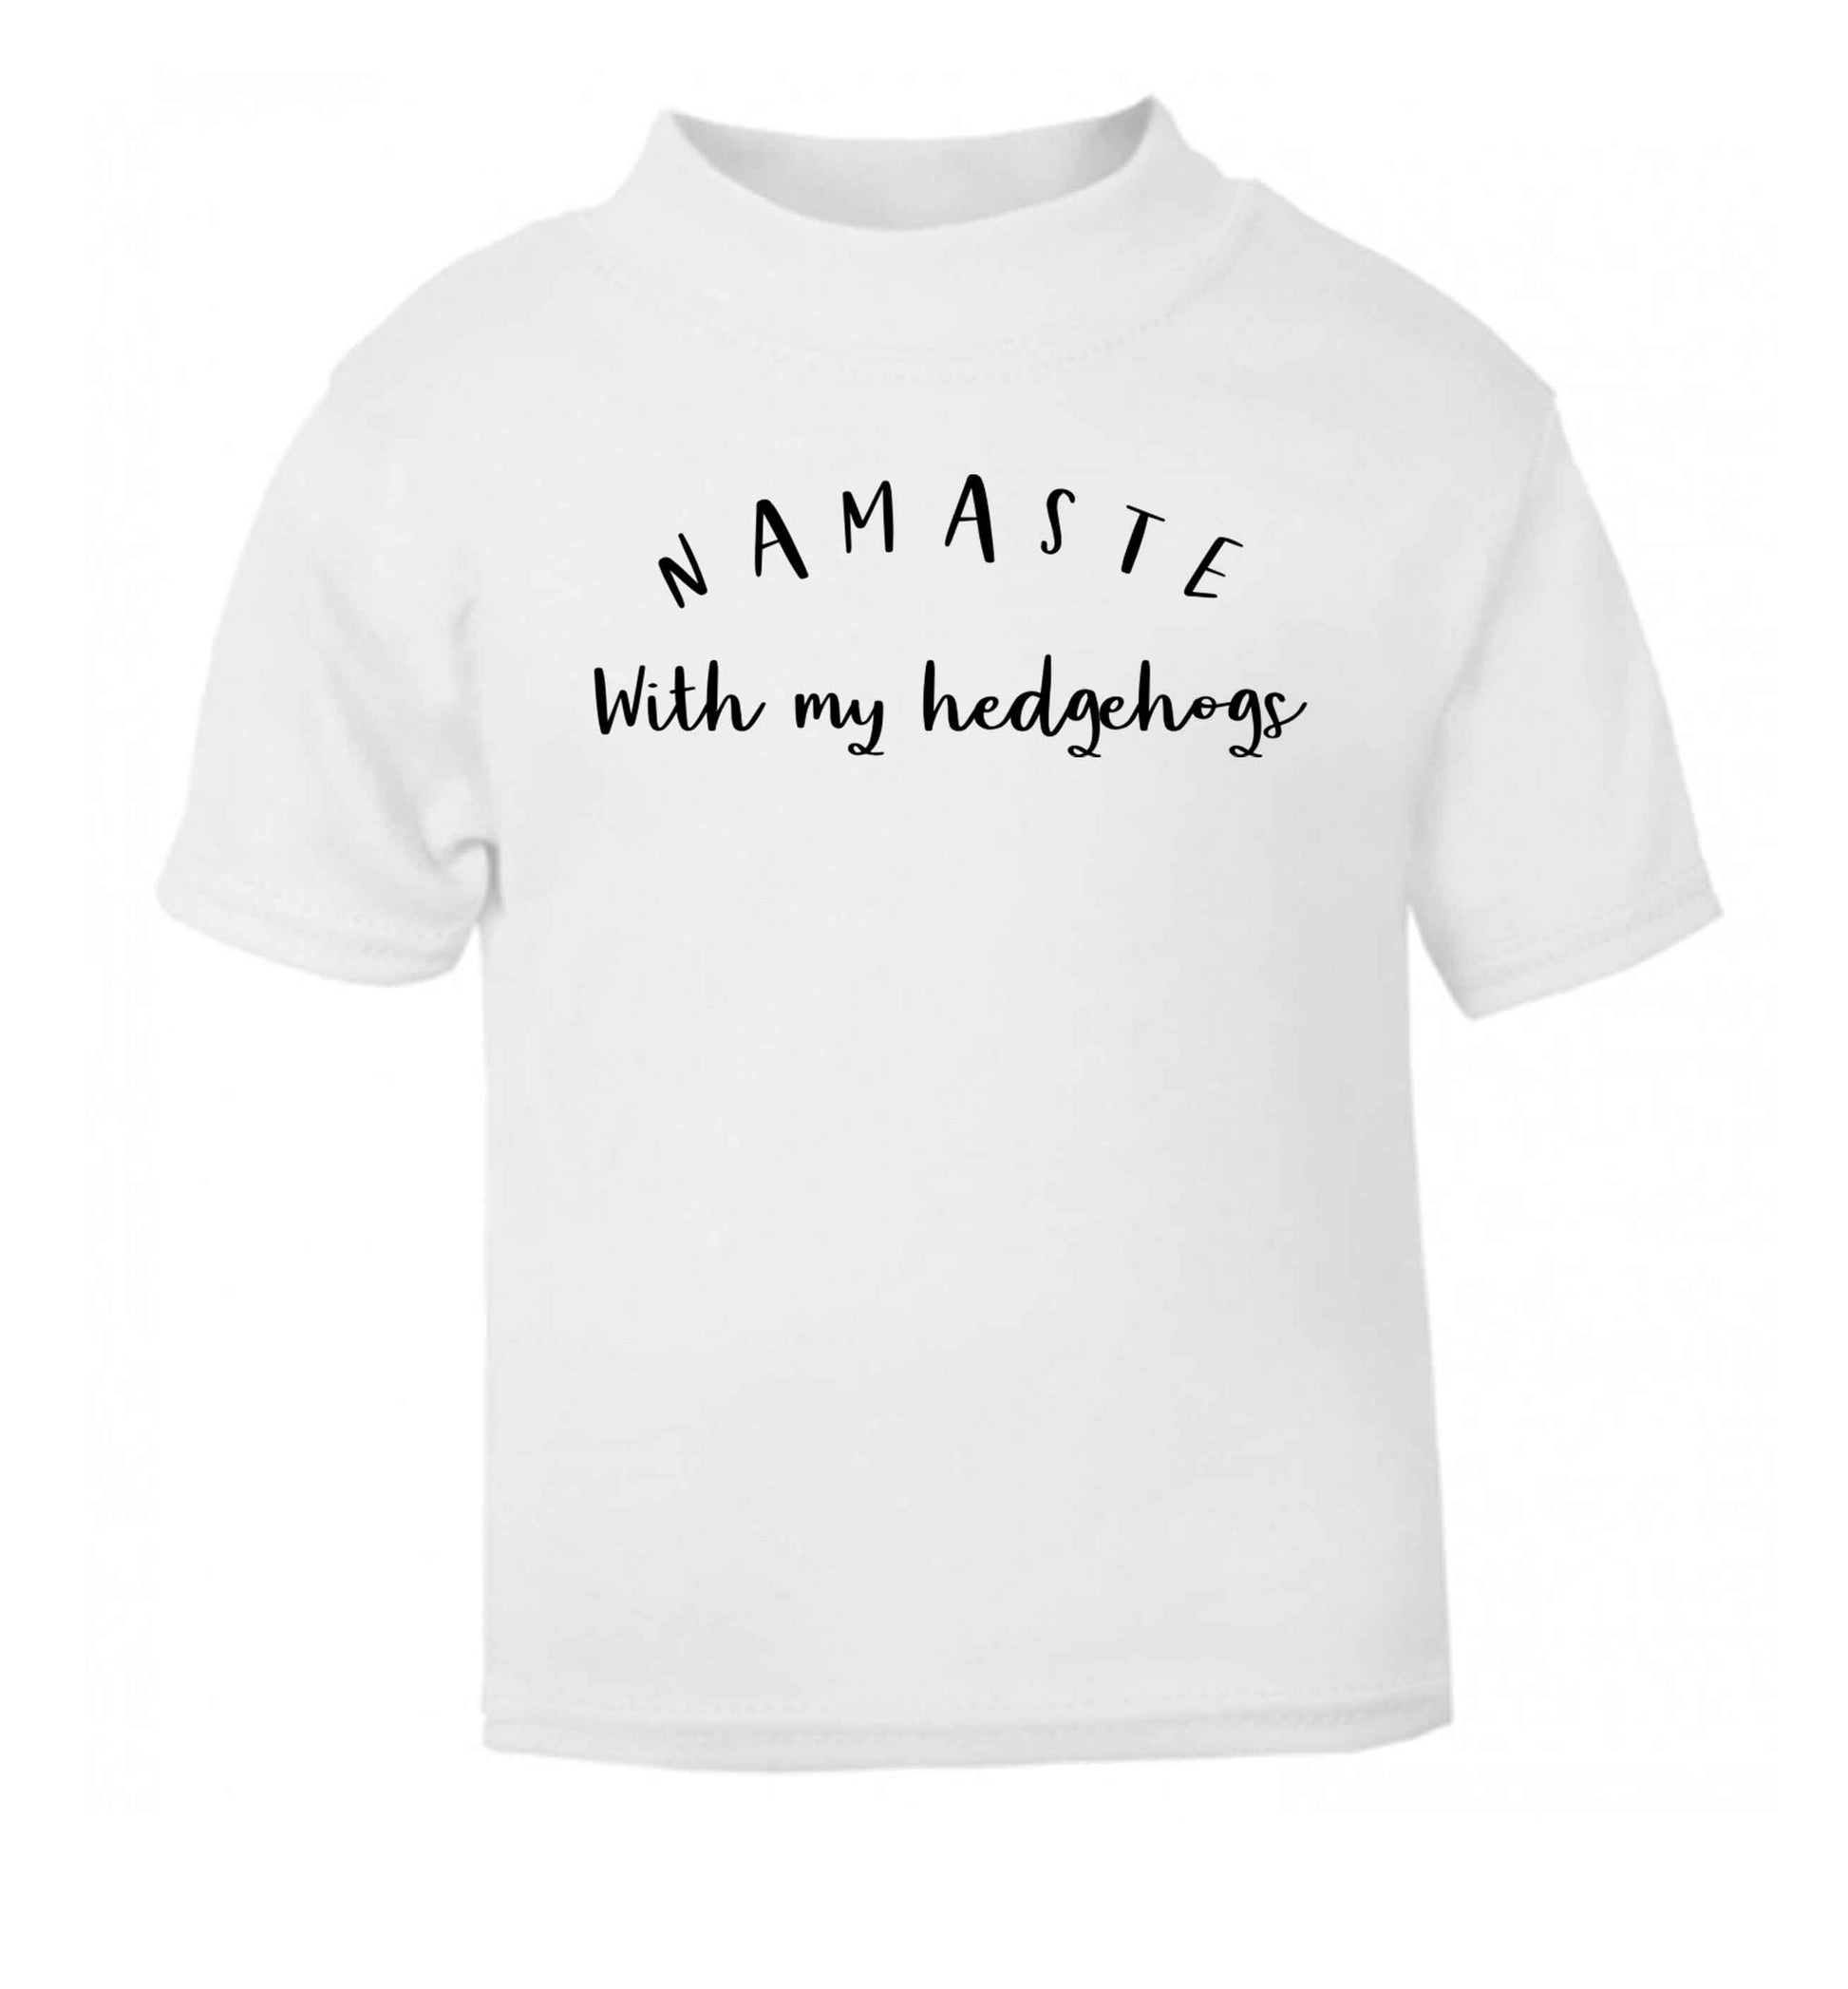 Namaste with my hedgehog white Baby Toddler Tshirt 2 Years